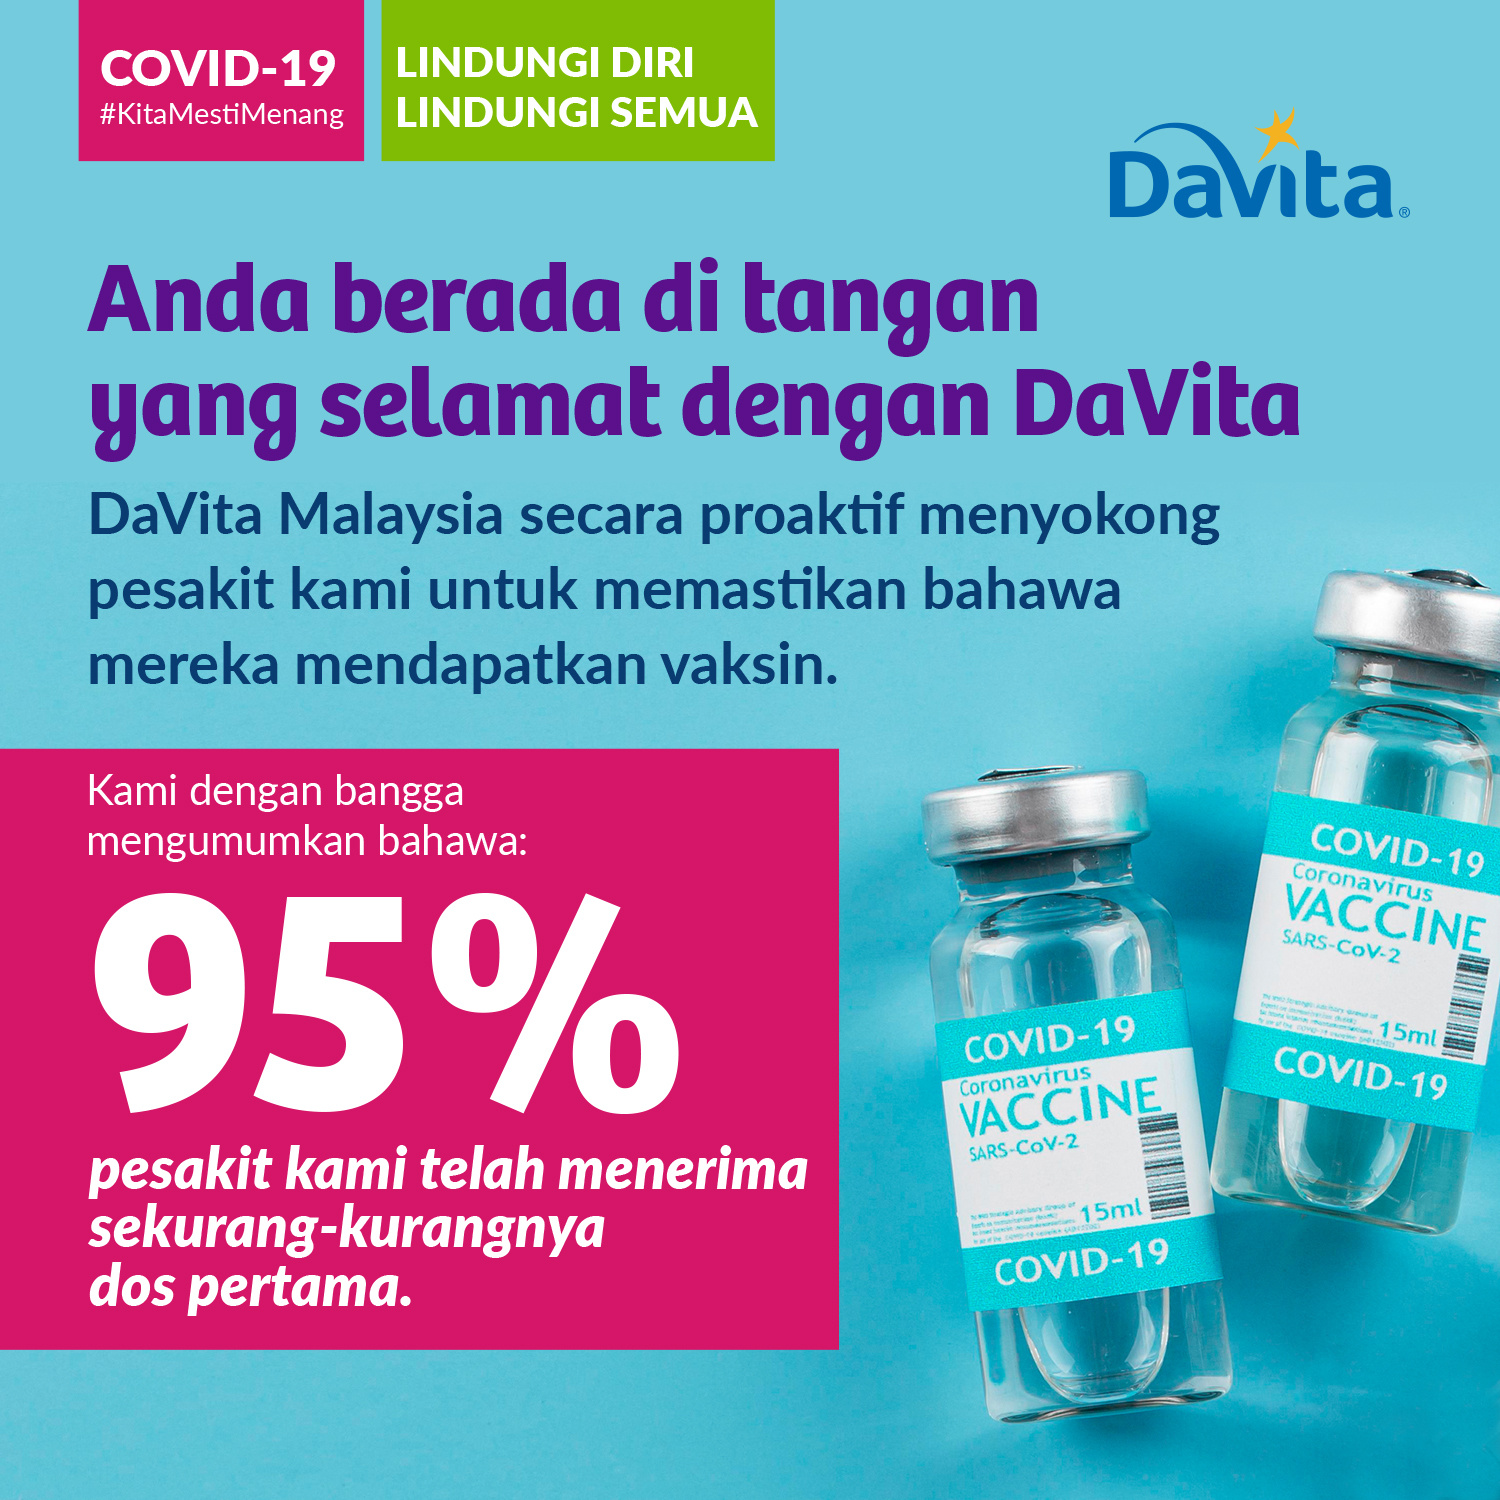 DaVita Malaysia COVID-19 Vaccination Efforts